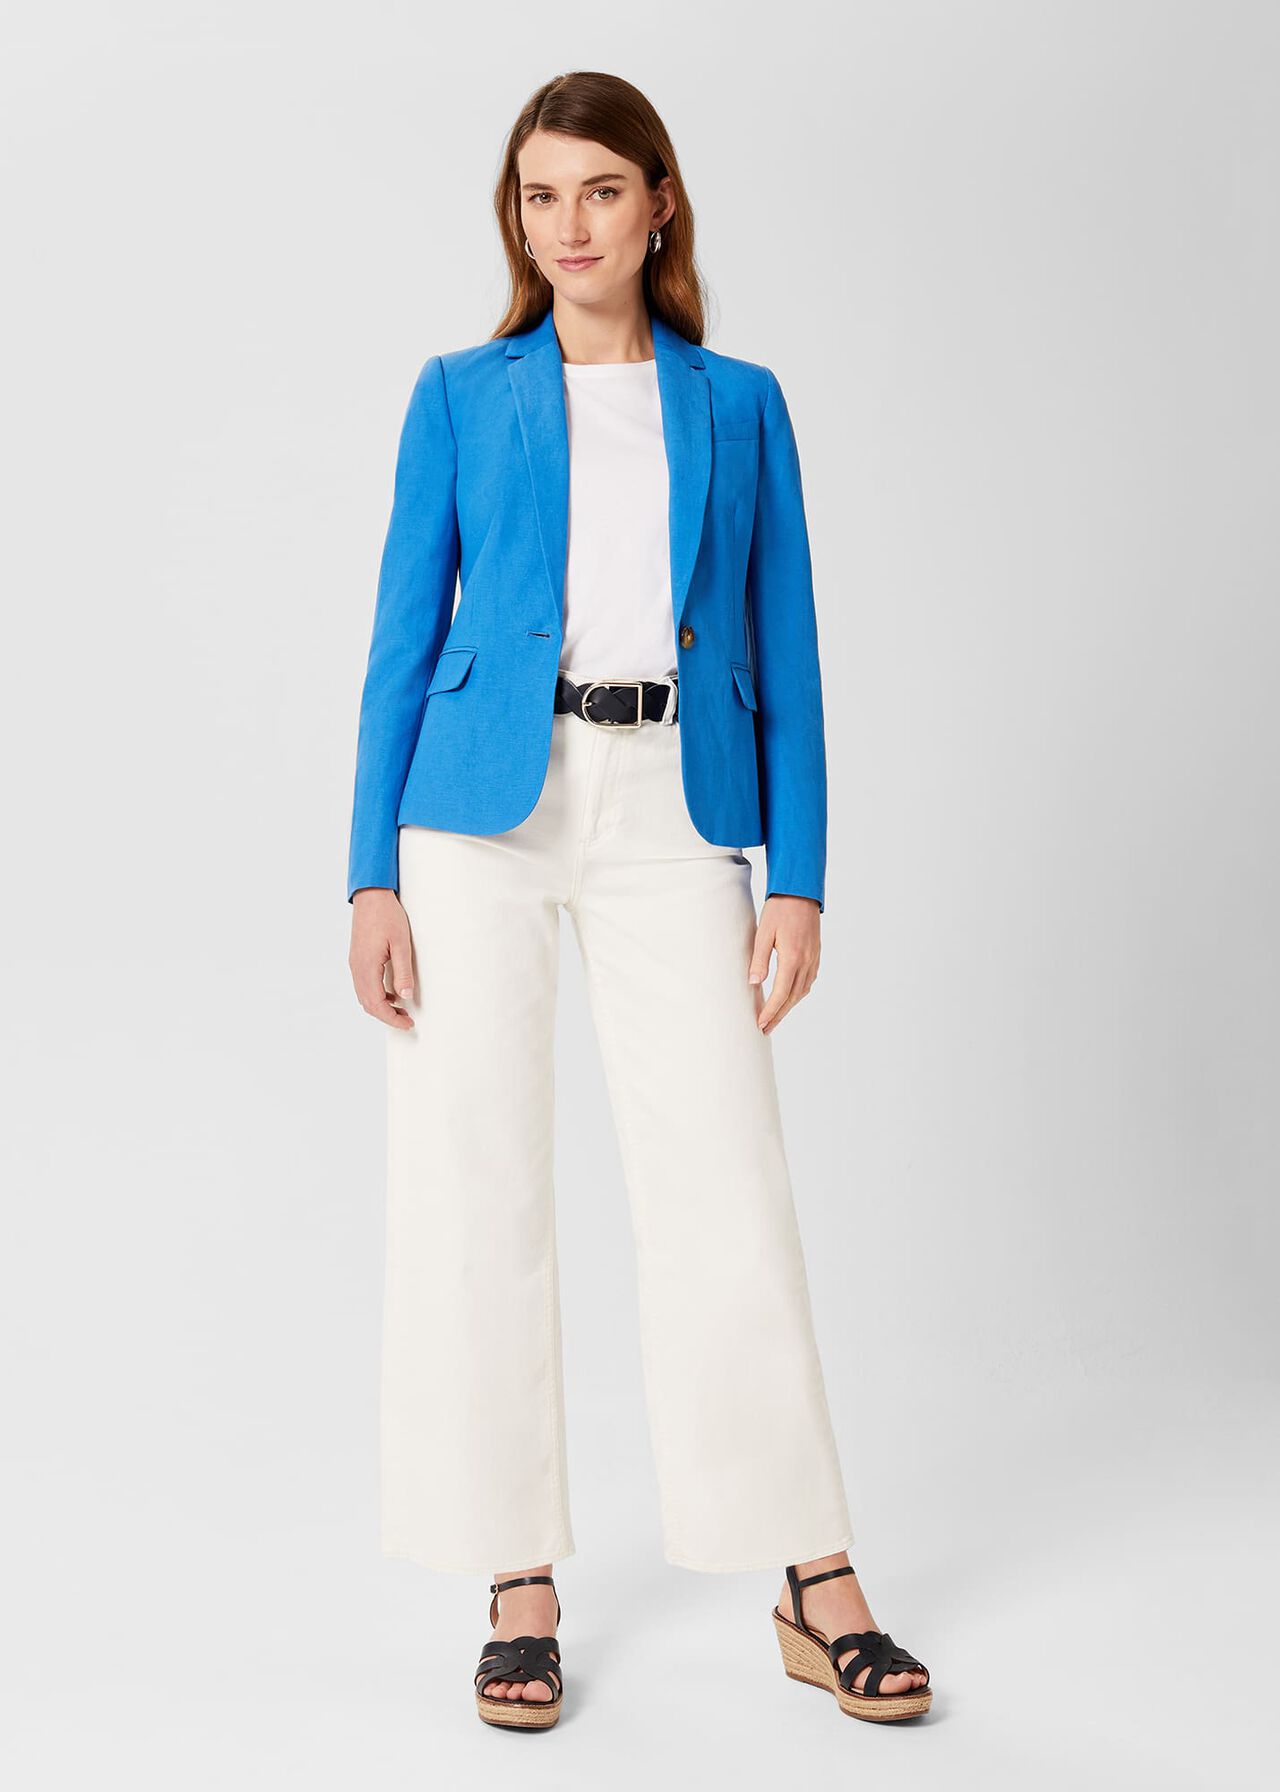 Blake Silk Linen Jacket , Azure Blue, hi-res